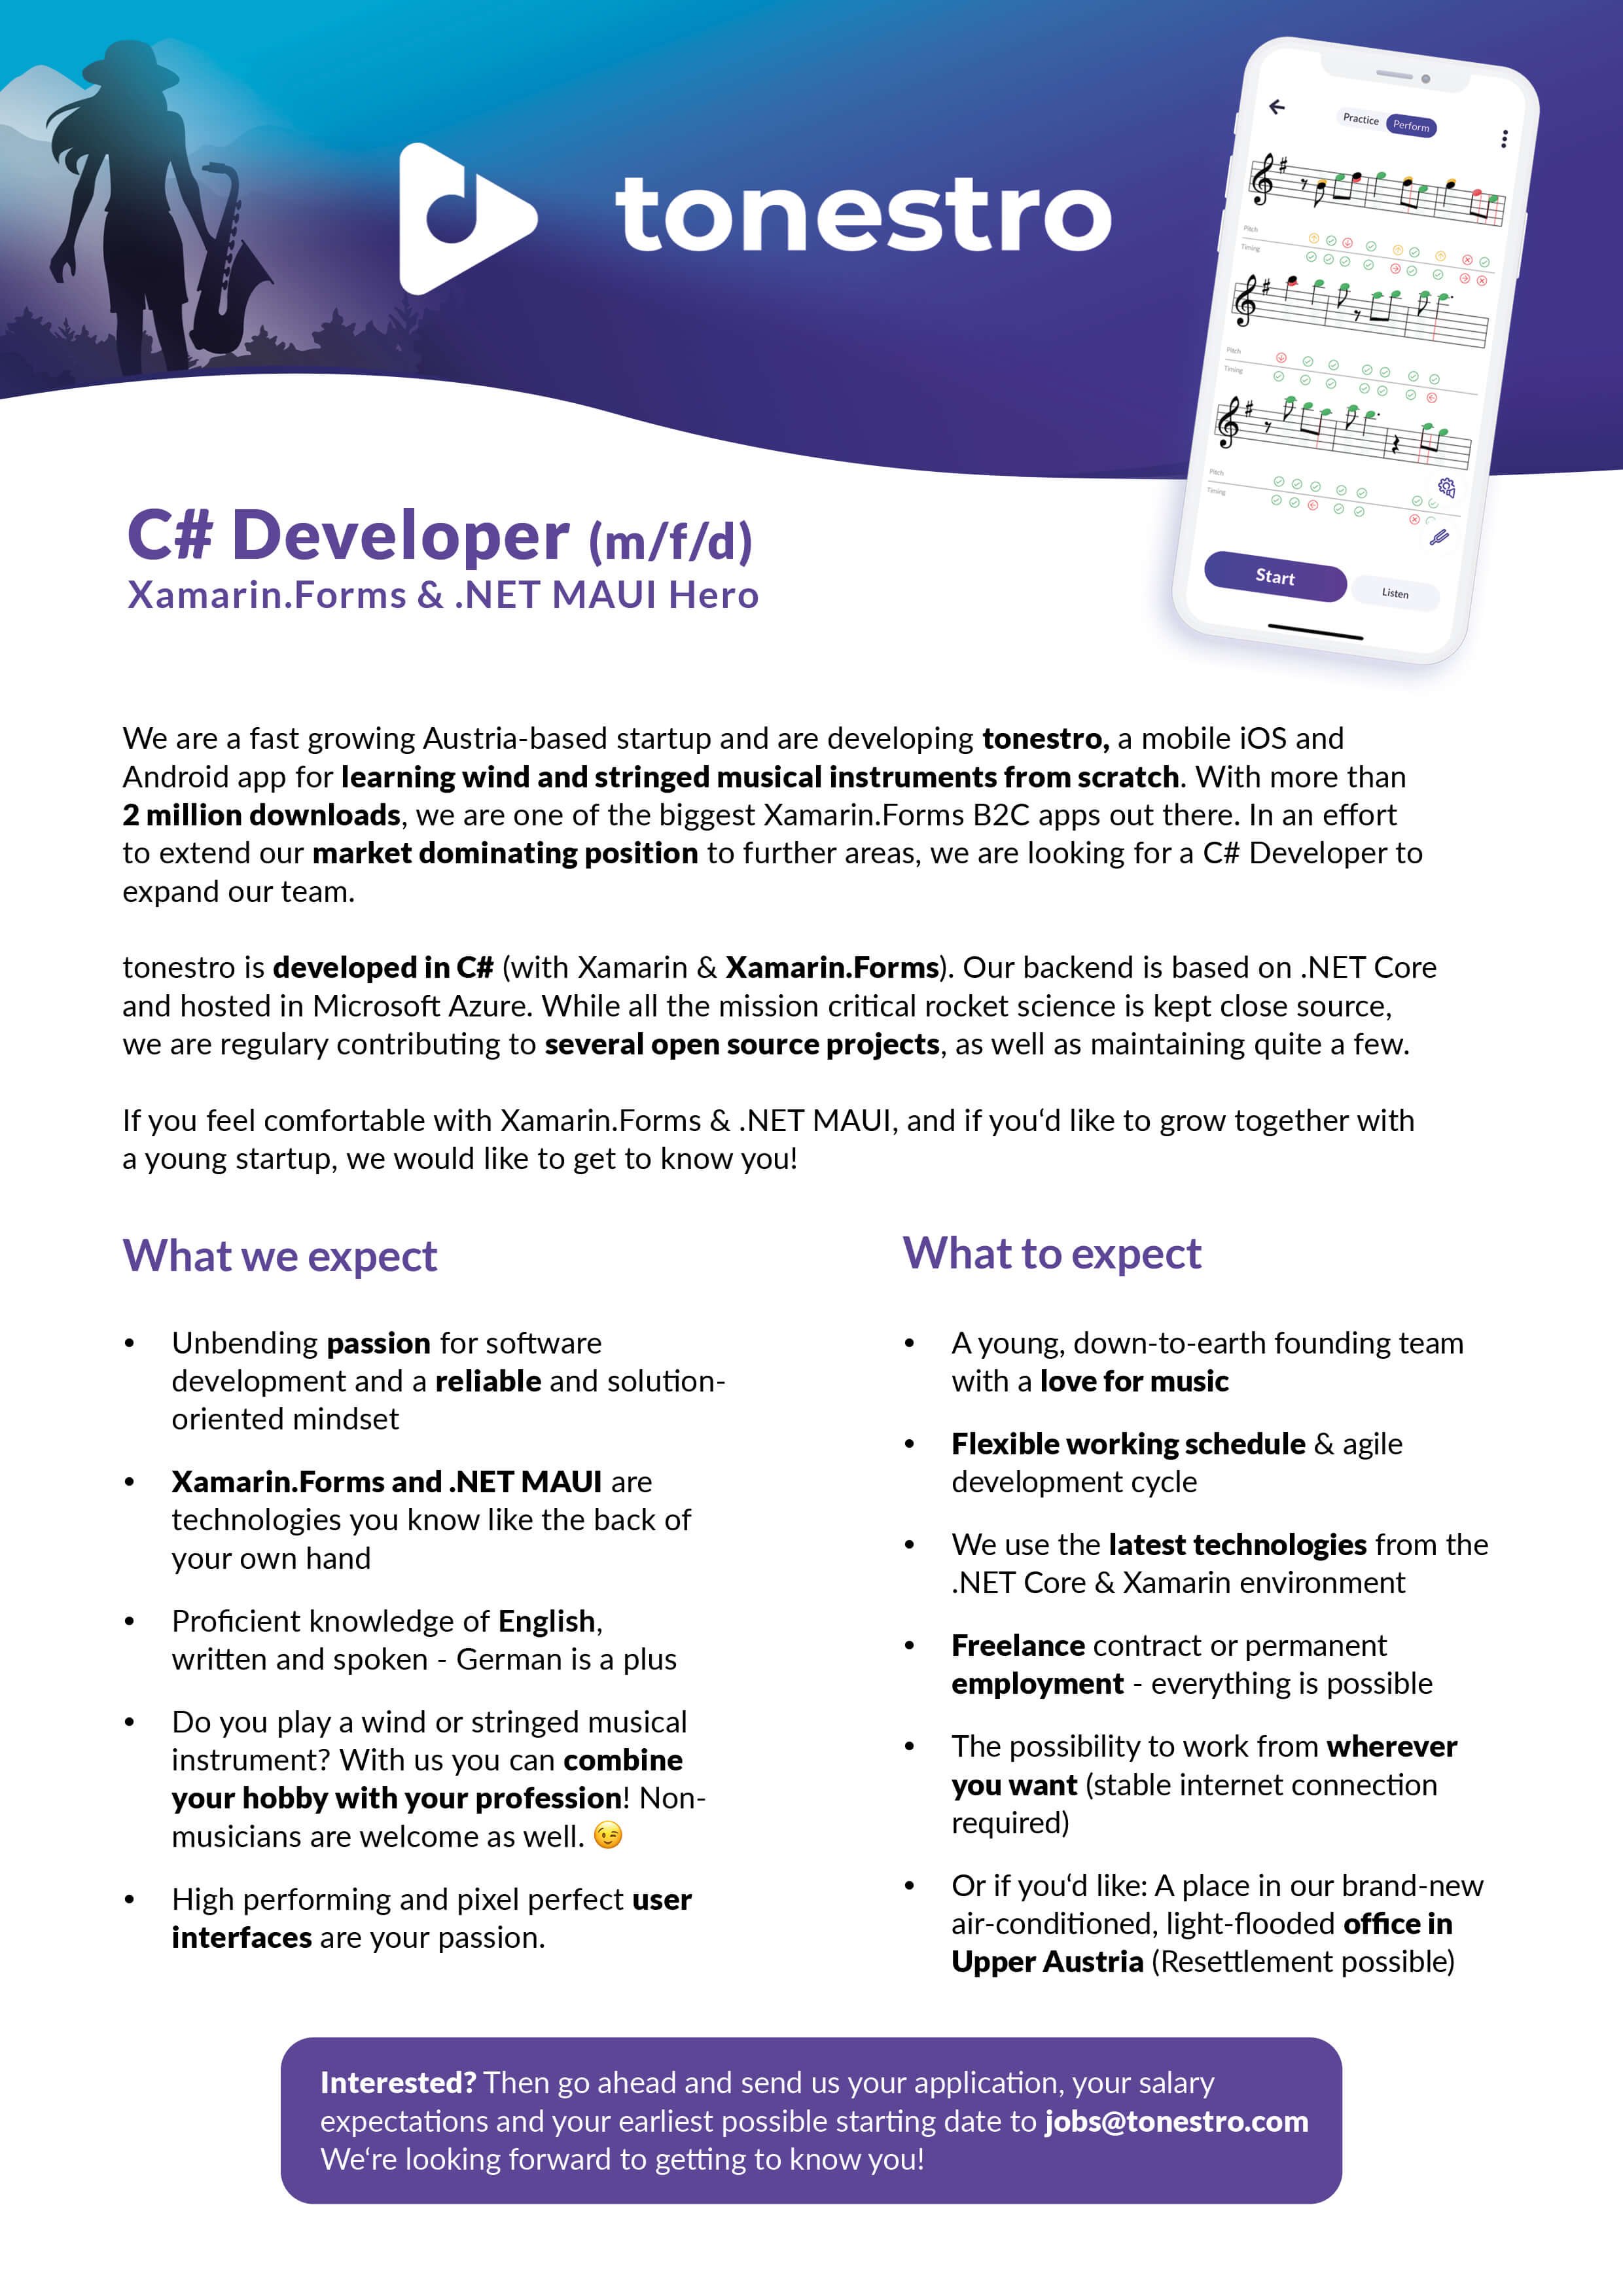 C# Developer Job Description